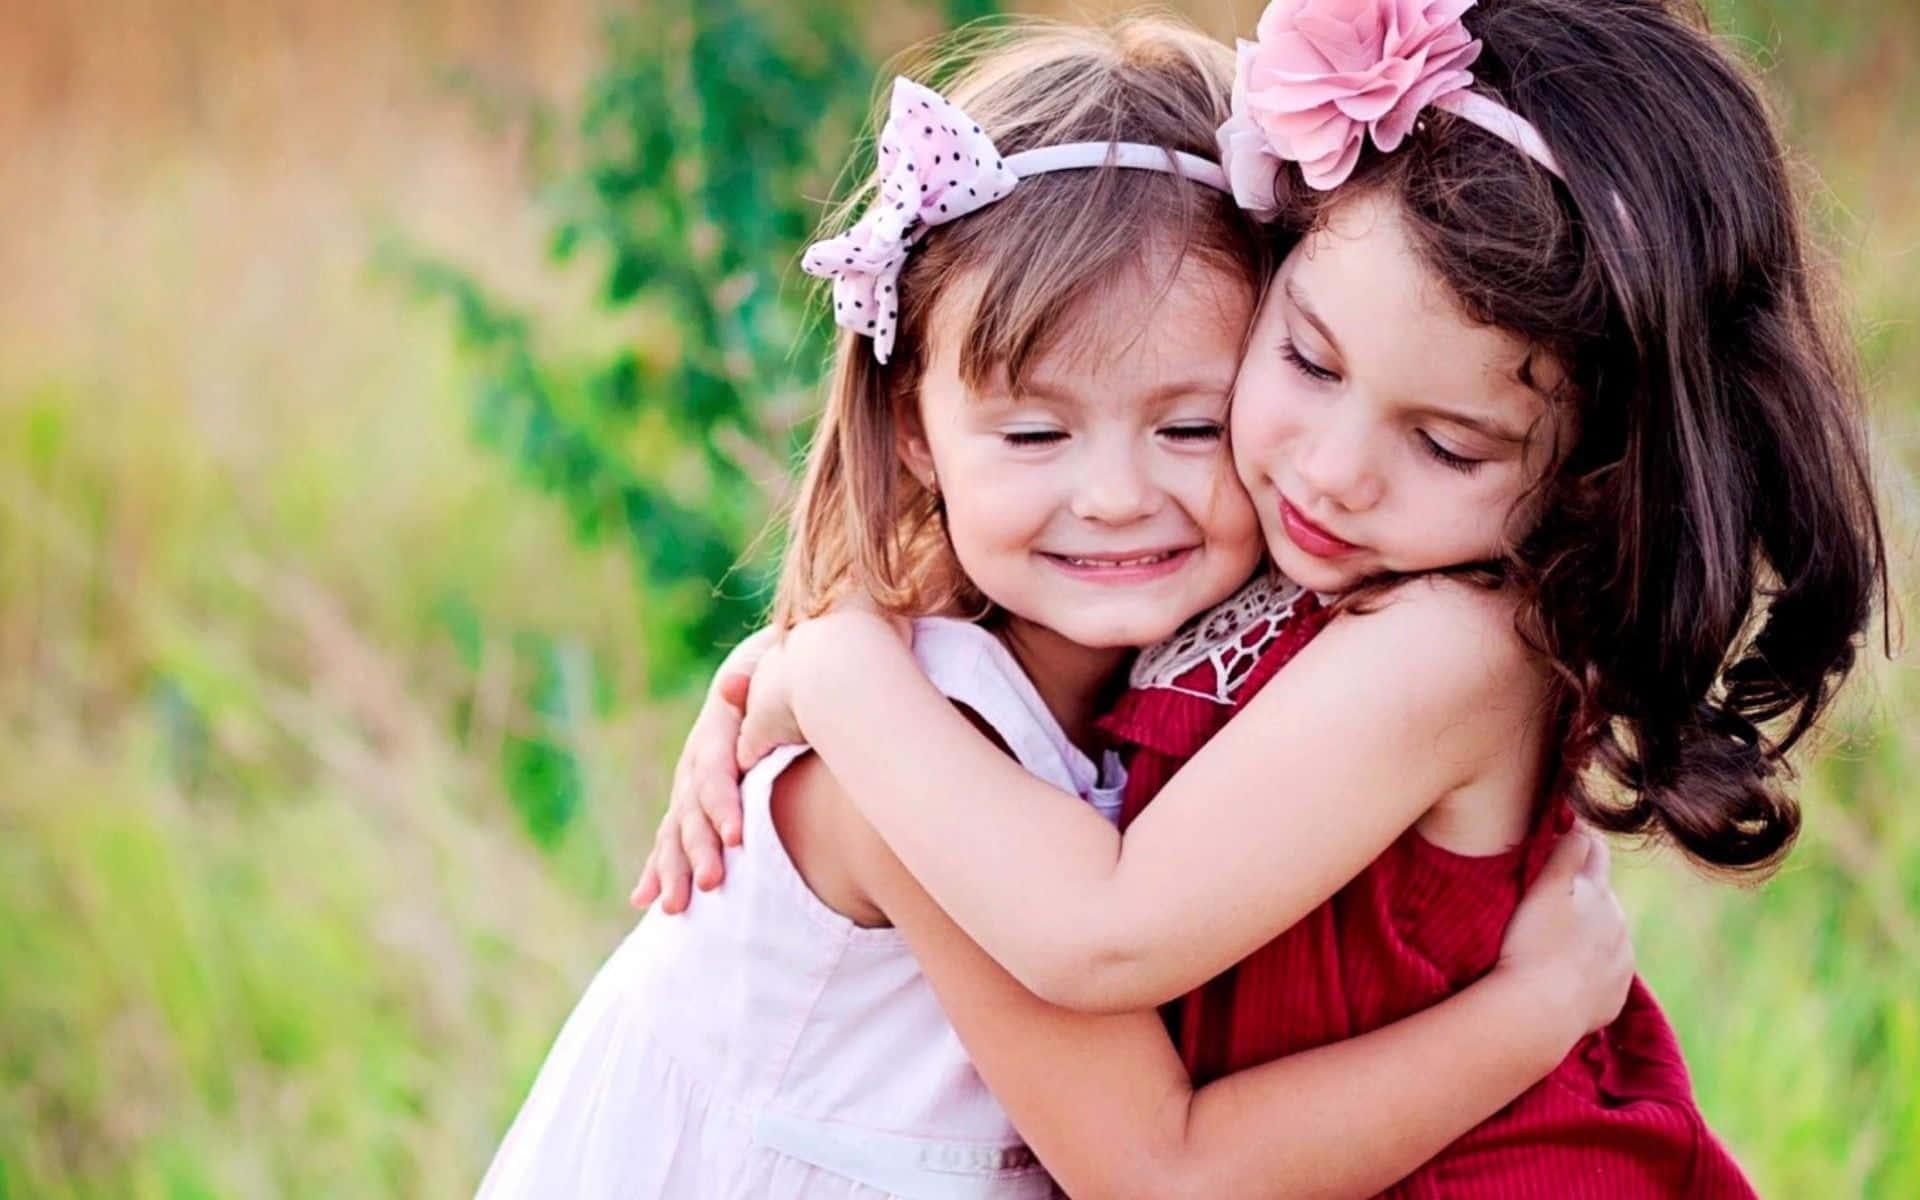 Adorable toddler siblings bonding and smiling outdoors Wallpaper